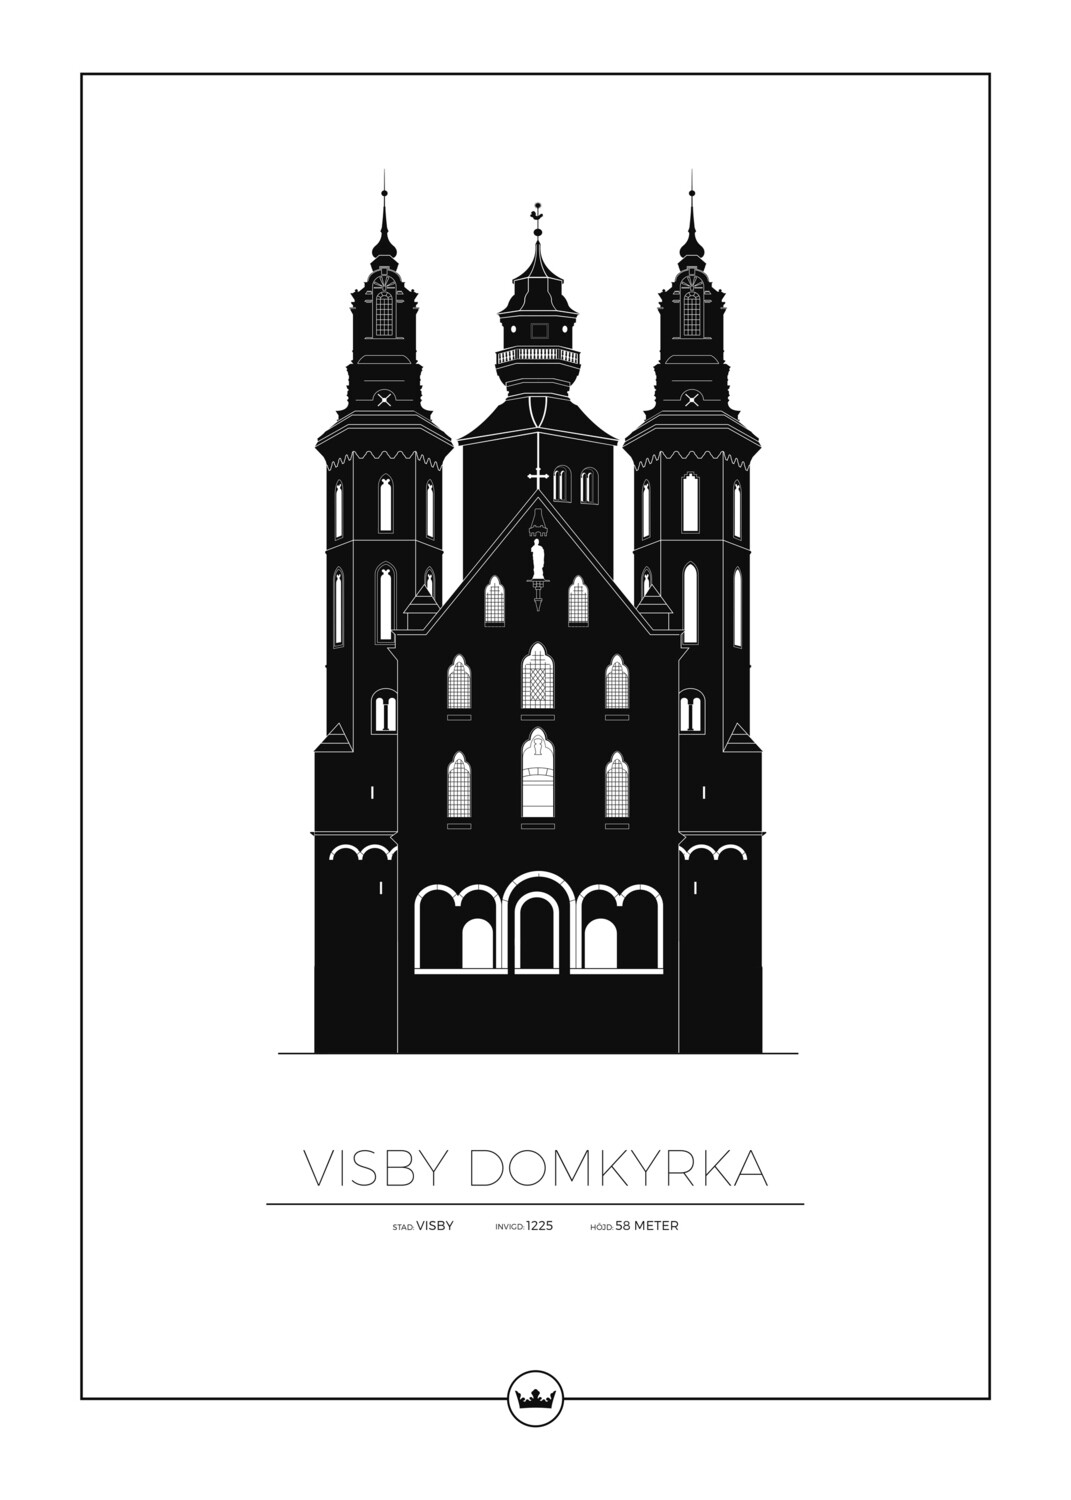 Posters Av Visby Domkyrka - Visby